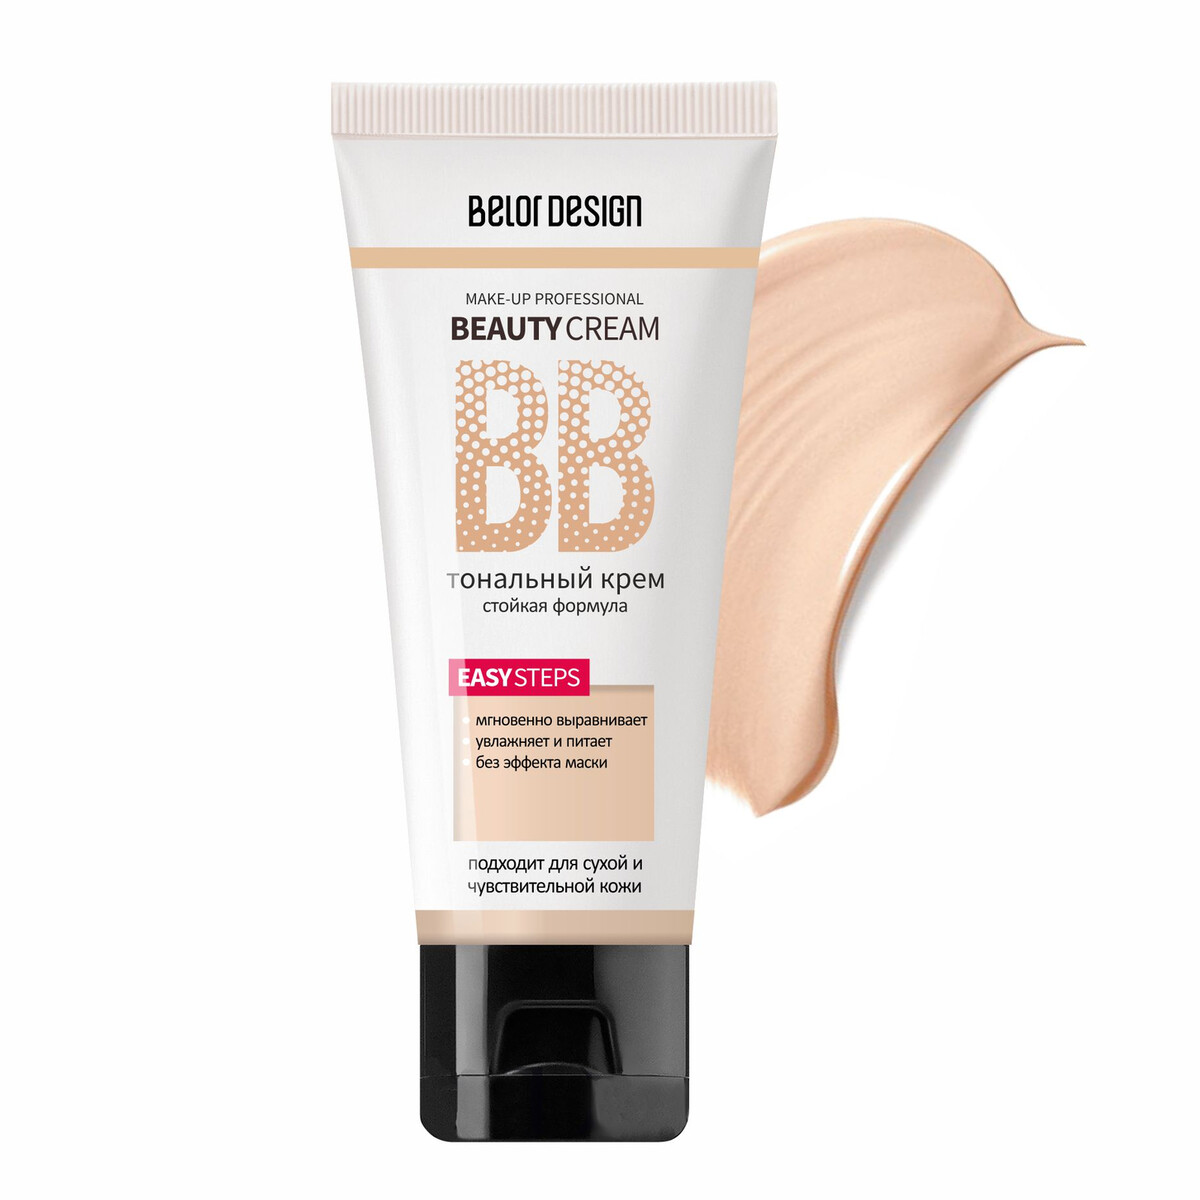   bb beauty cream  102